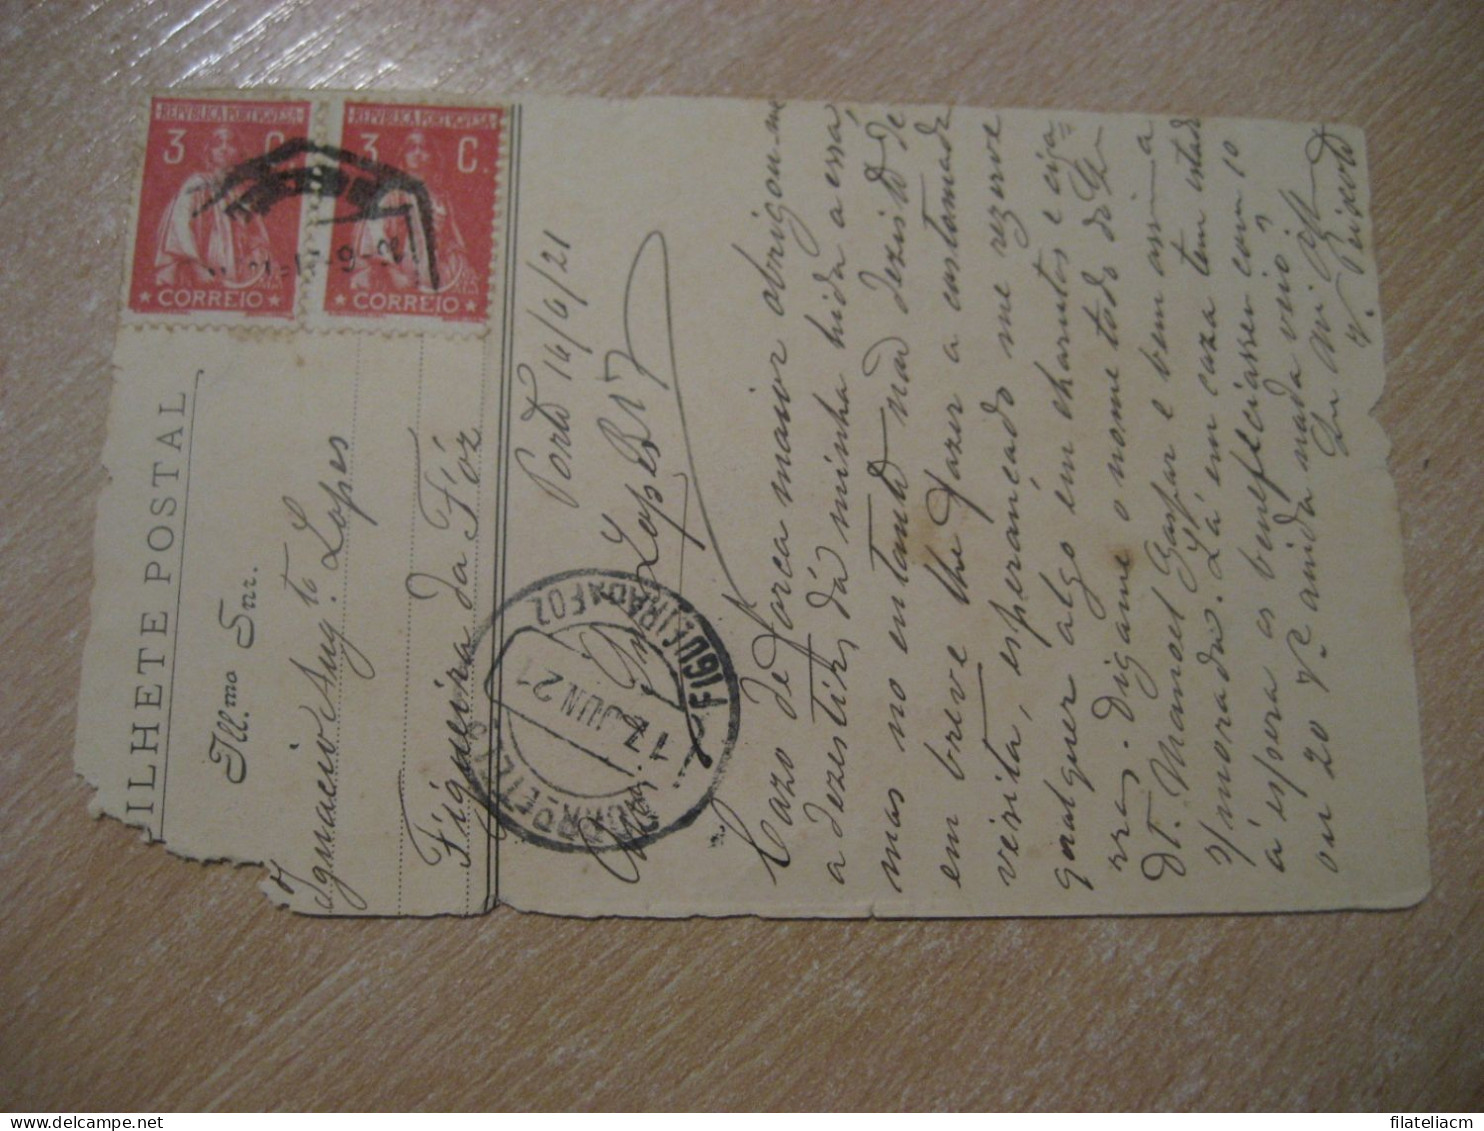 COINTREAU Licor PORTO 1921 To Figueira Da Foz Damaged Bilhete Postal Postcard PORTUGAL - Advertising